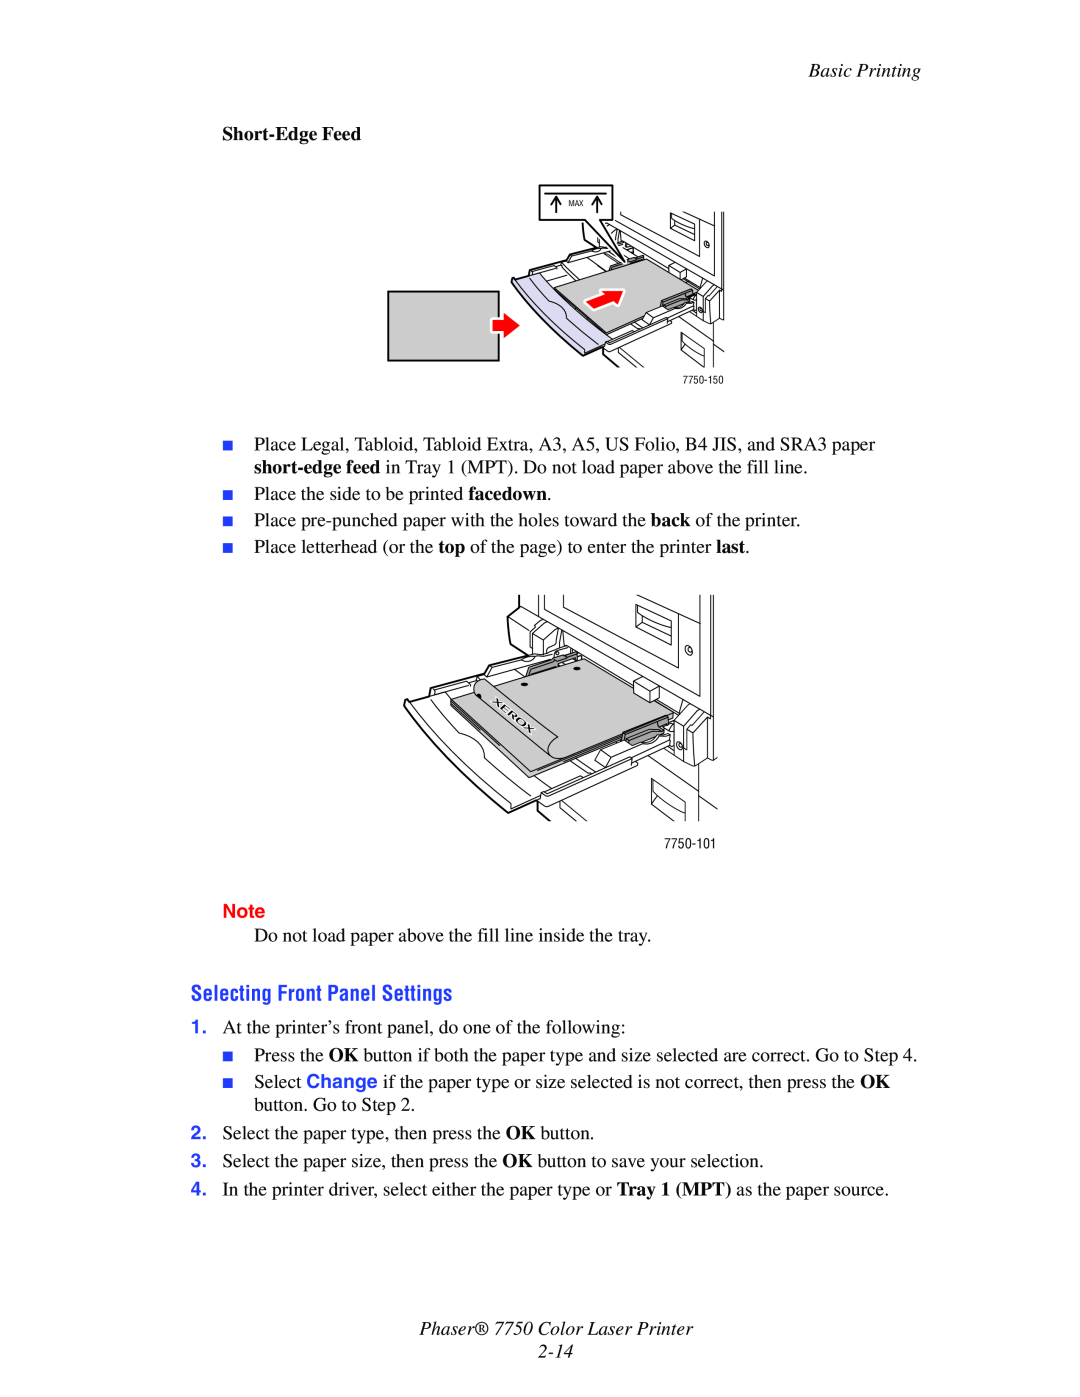 Xerox manual Selecting Front Panel Settings, Short-EdgeFeed, Phaser 7750 Color Laser Printer, Basic Printing 